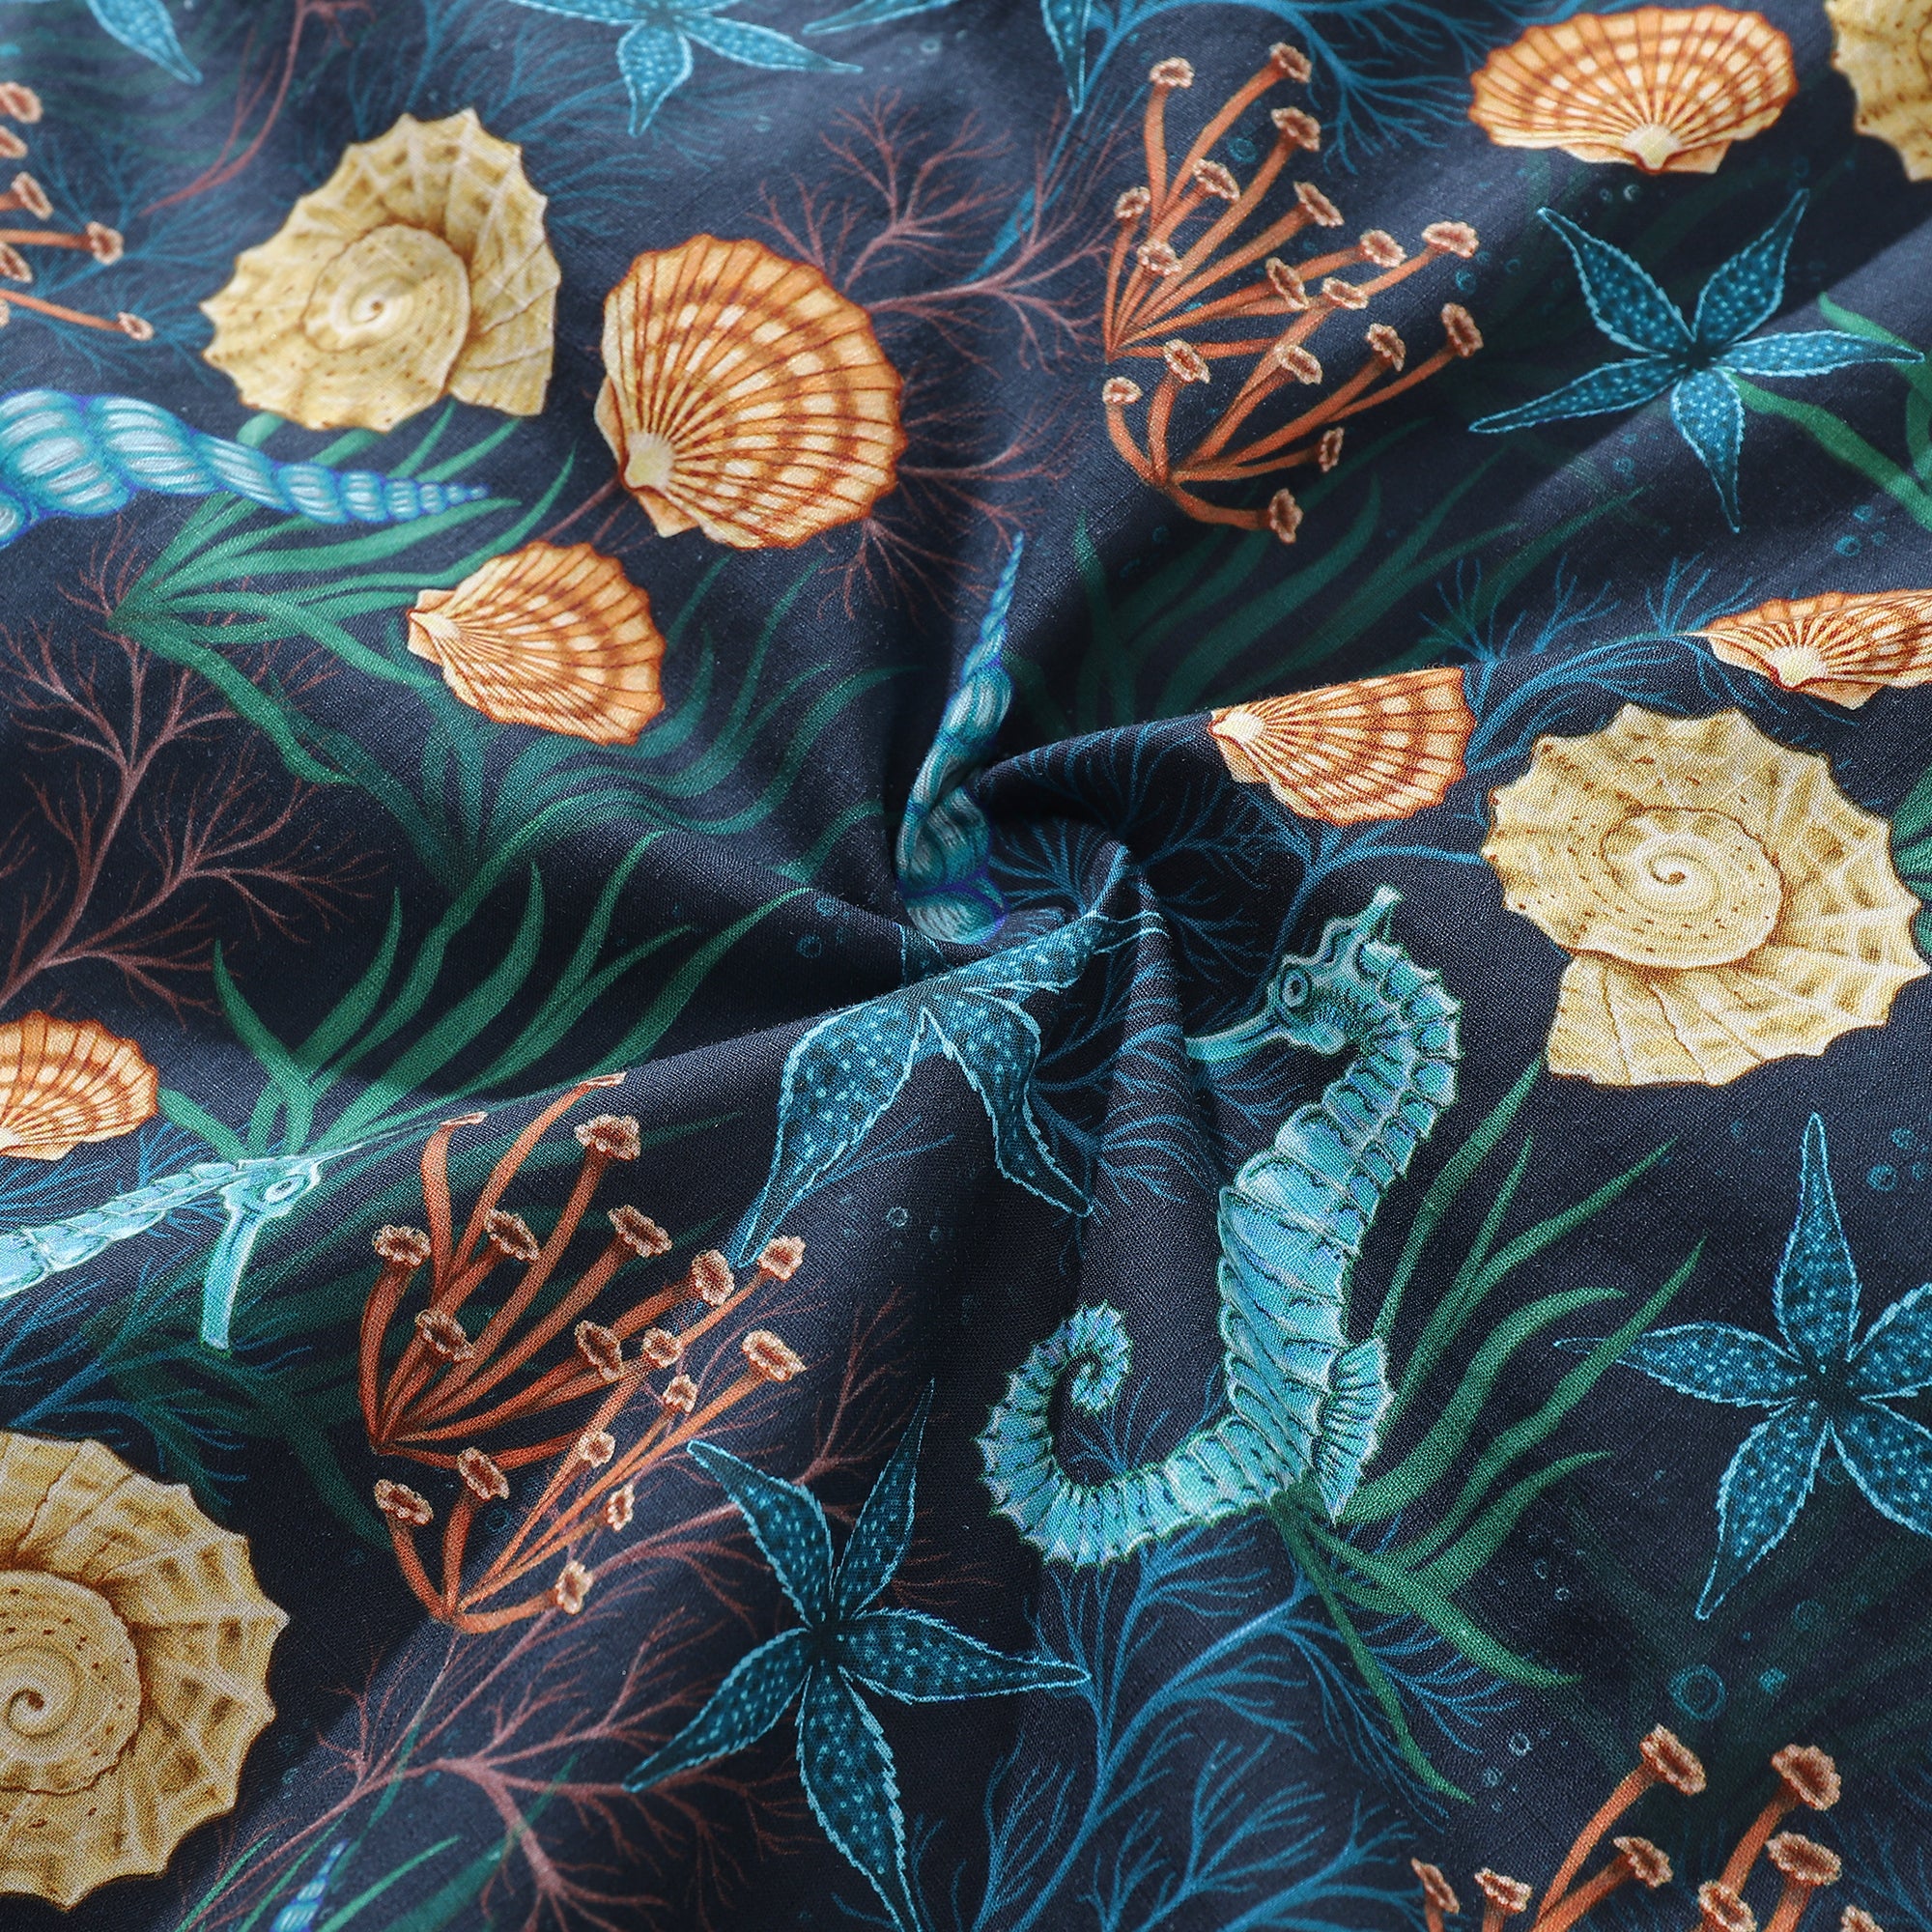 Men's Hawaiian Shirt Wonders of the Sea Print By Luova Flow Cotton Button-down Short Sleeve Aloha Shirt